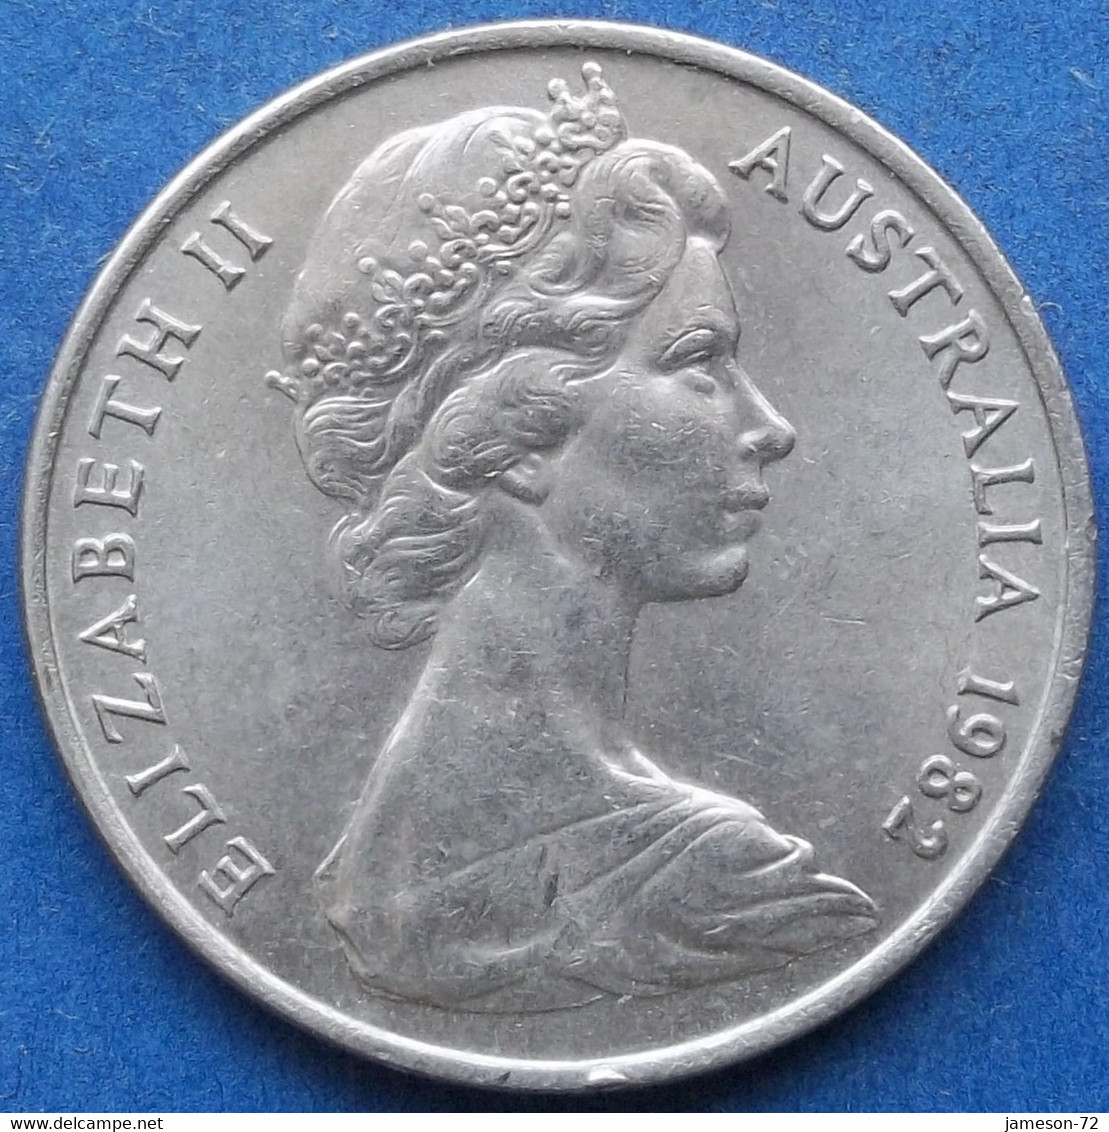 AUSTRALIA - 20 Cents 1982 "duckbill Platypus" KM# 66 Elizabeth II Decimal Coinage (1971-2022) - Edelweiss Coins - 20 Cents